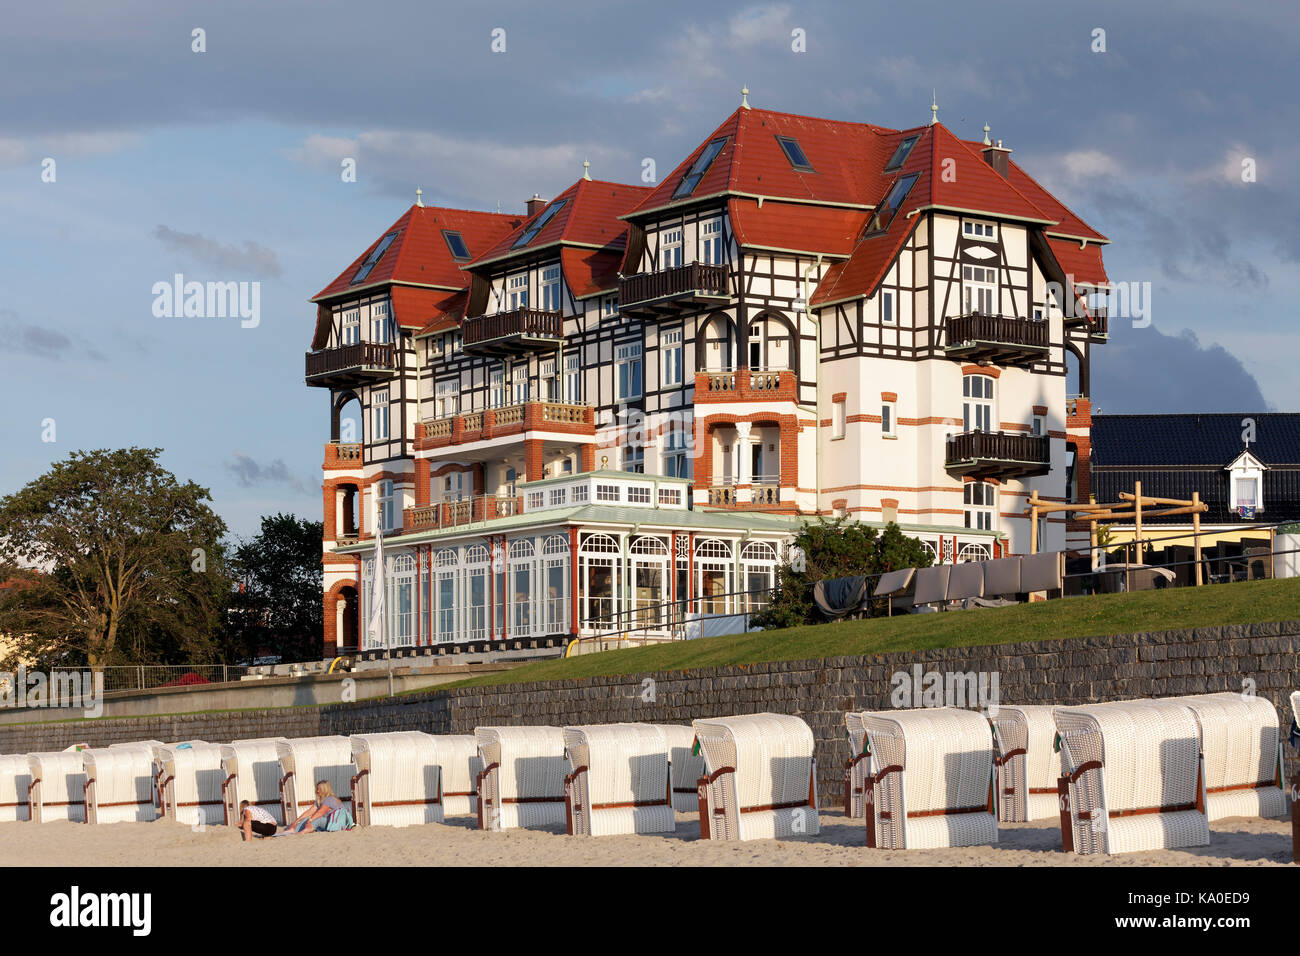 Historical beach hotel Schloss am Meer, Resort architecture, Baltic resort Kühlungsborn, Mecklenburg-Western Pomerania, Germany Stock Photo